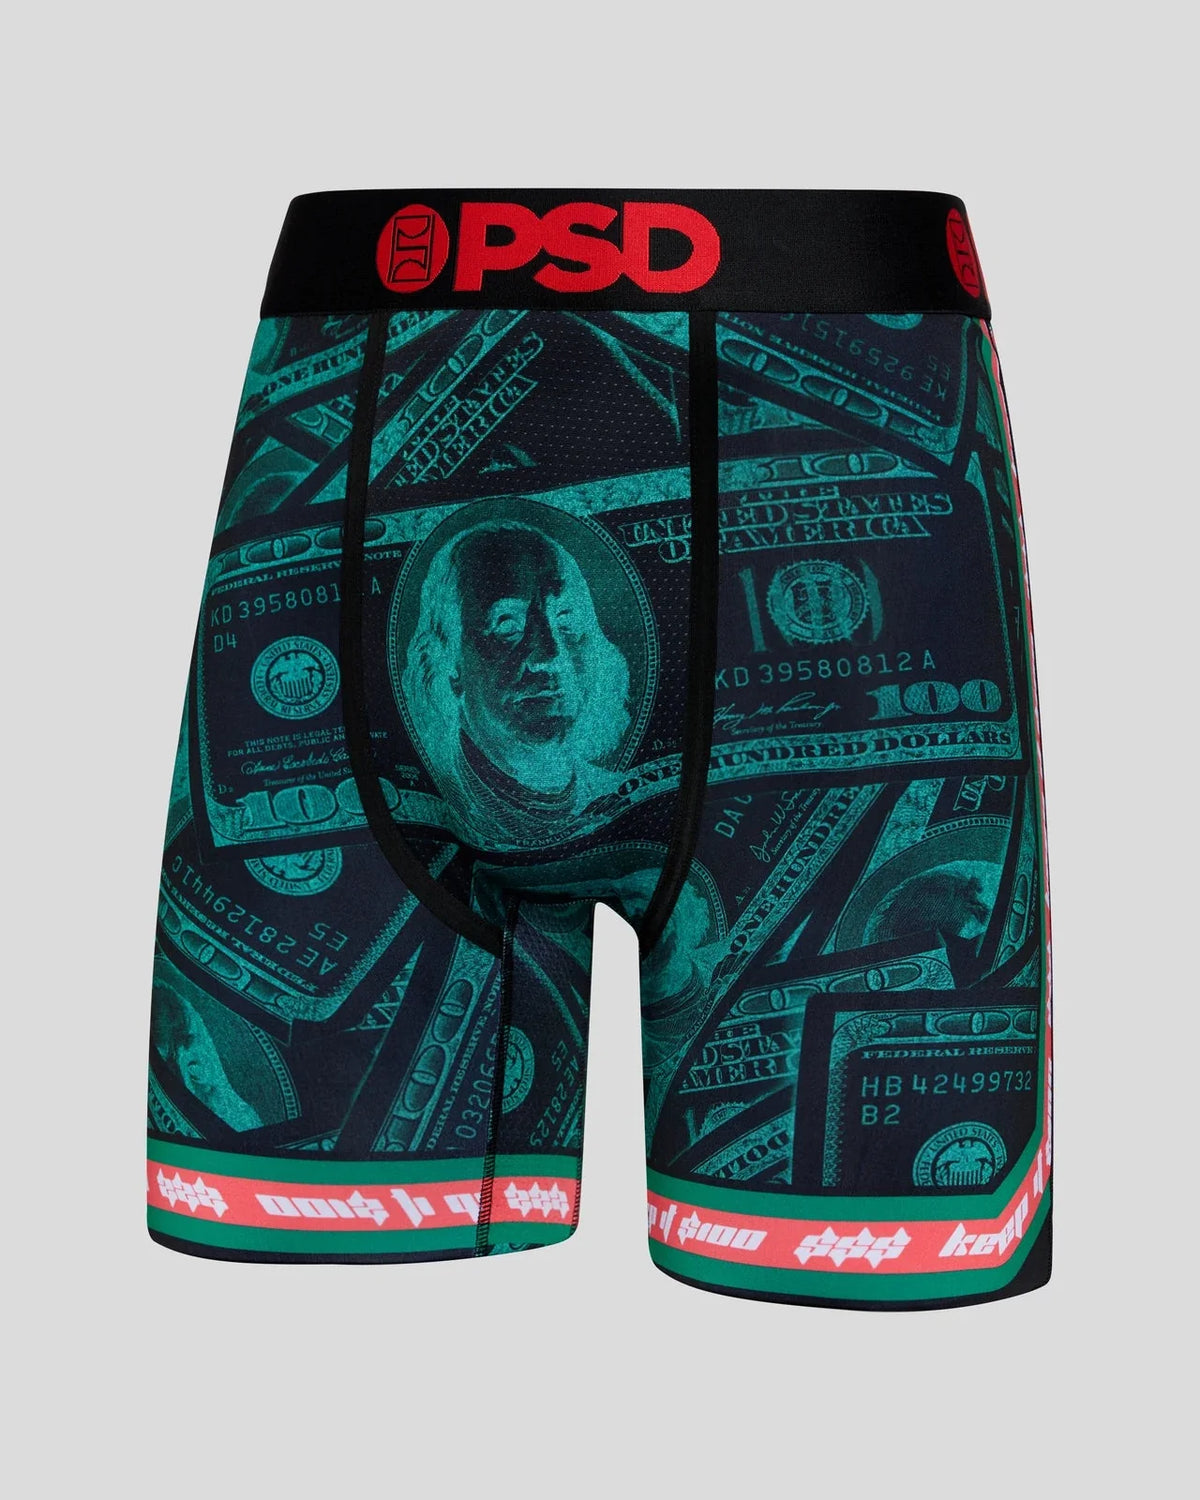 PSD Rubber Ducky Pool Summer Urban Athletic Boxer Briefs Underwear